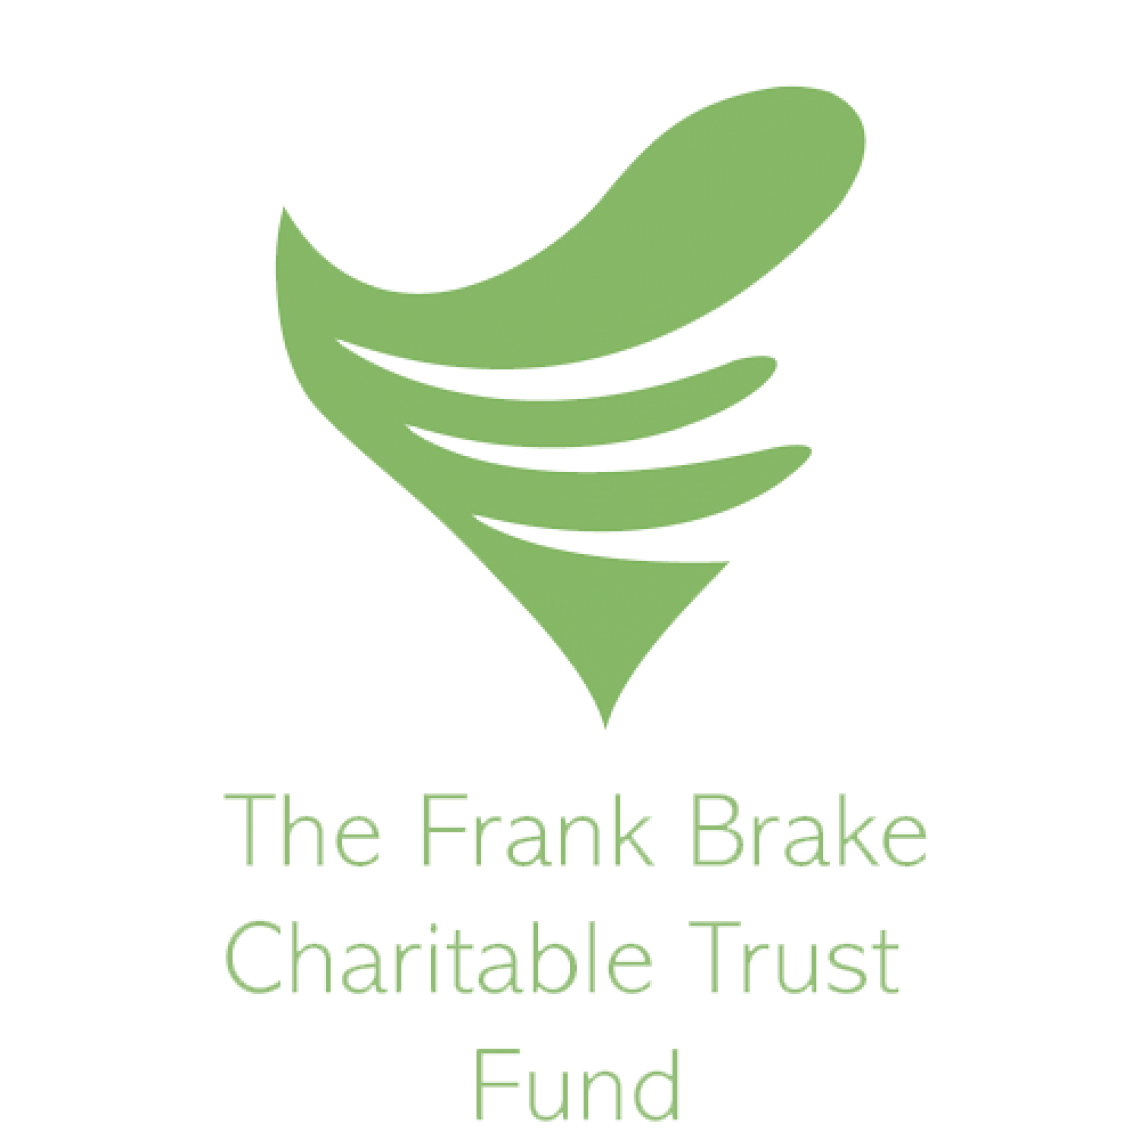 The Frank Brake Charitable Trust Fund logo